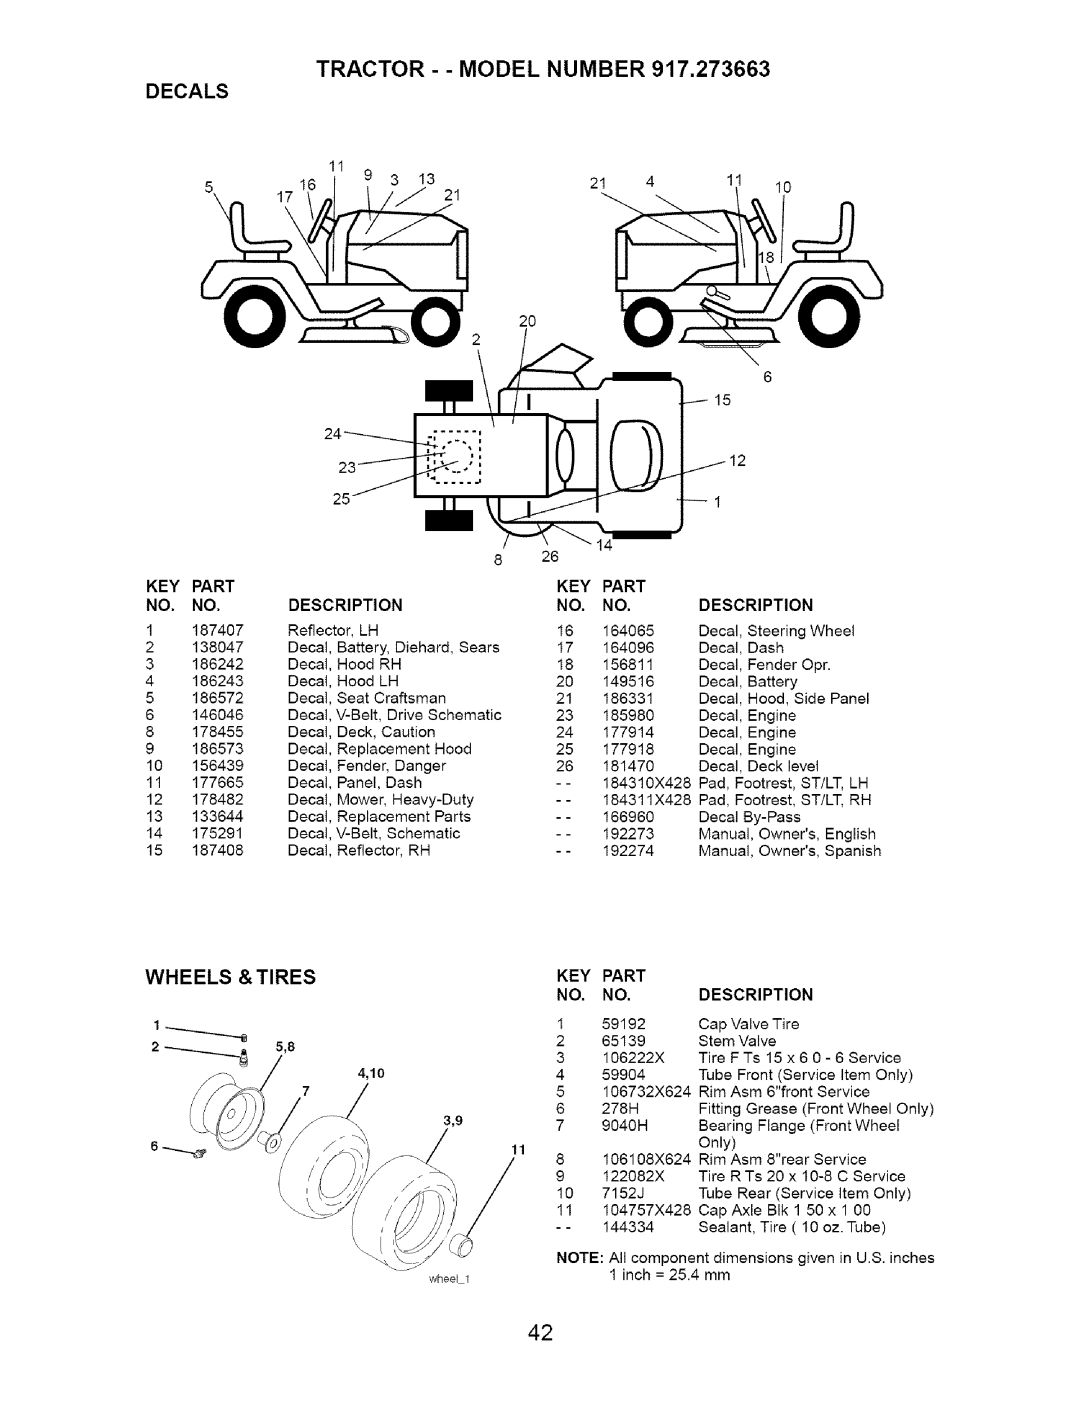 Craftsman 917.273663 owner manual TRACTOR - - MODEL NUMBER 917,273663, Decals, Wheels, Tires 